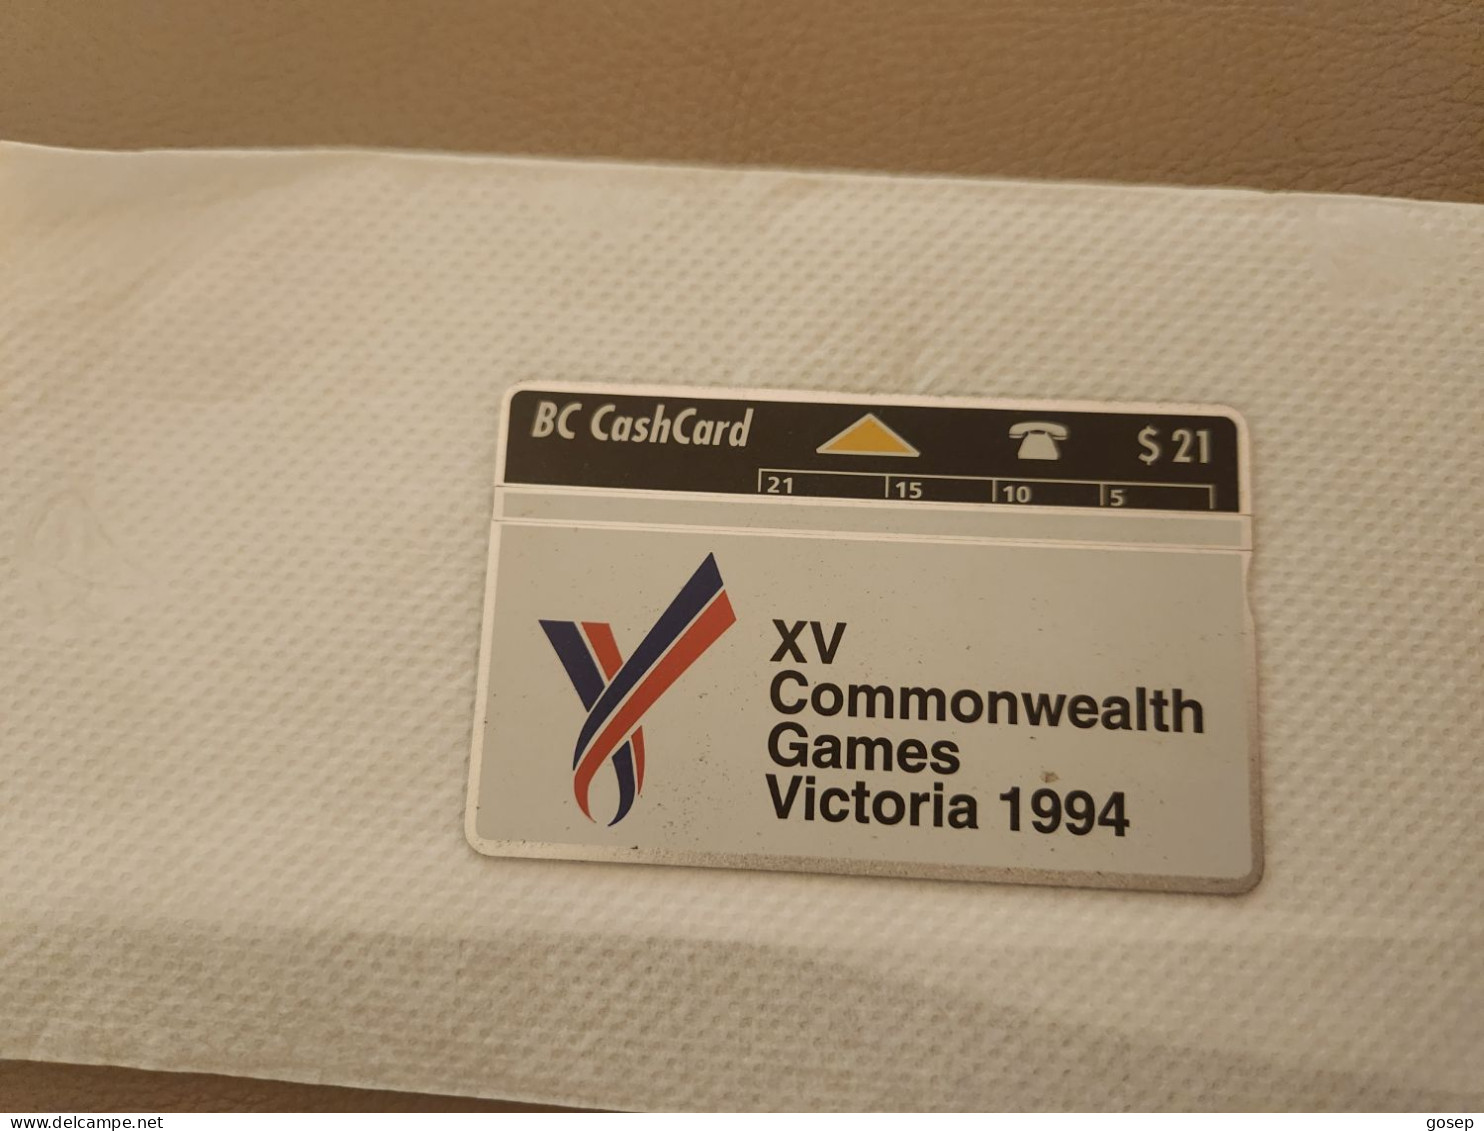 CANADA-(CAN-L-02)-XV Commonwealth Games-(61)-(308A48043)-(8/93)-(tirage-25.000)-($21)-mint+1card Prepiad Free - Canada